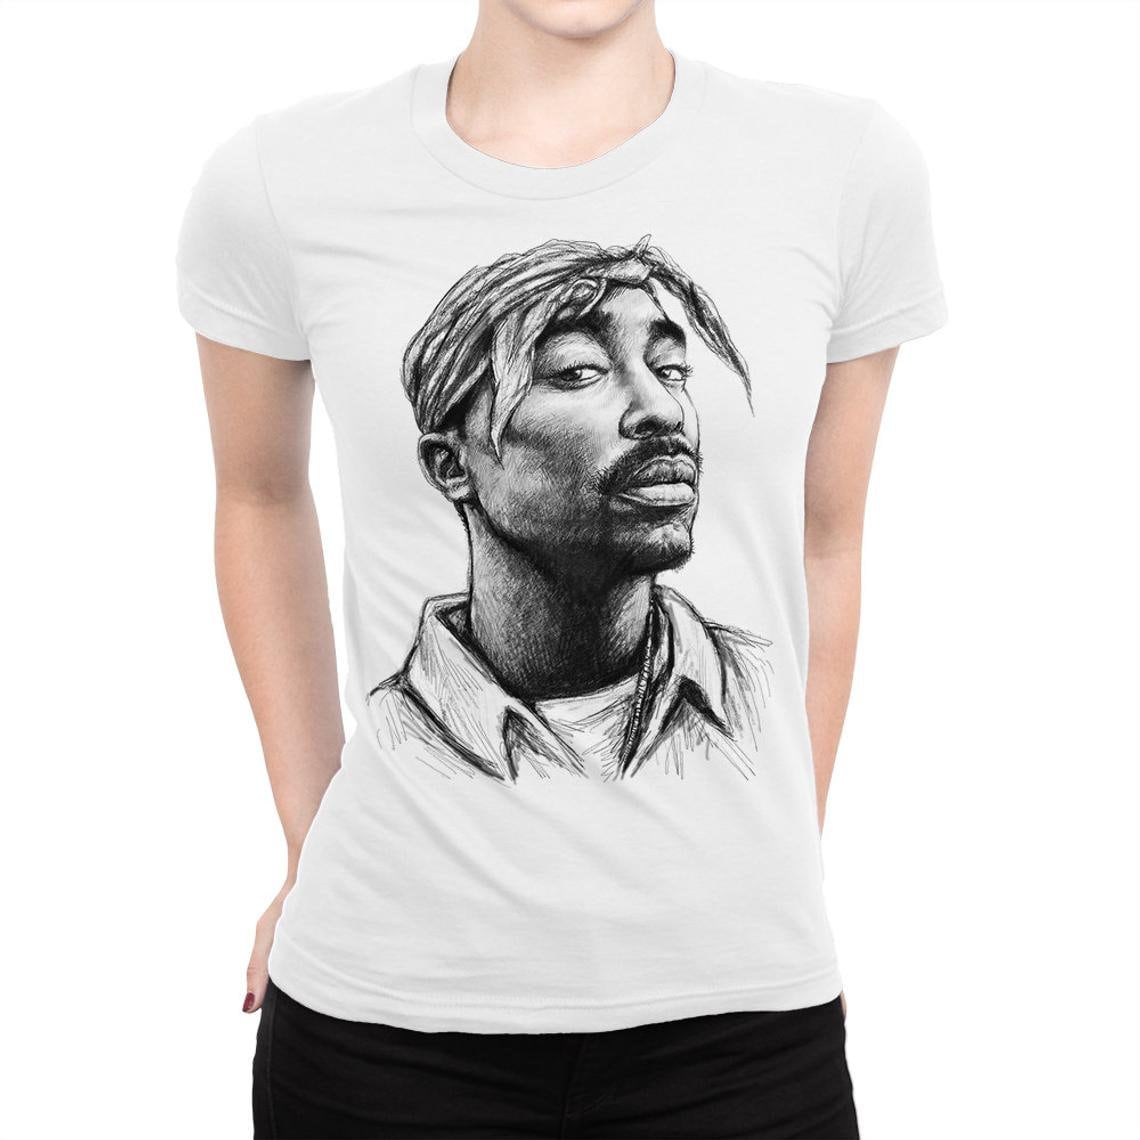 2pac-graphic-t-shirt-tupac-shakur-hip-hop-tee-men-s-and-etsy